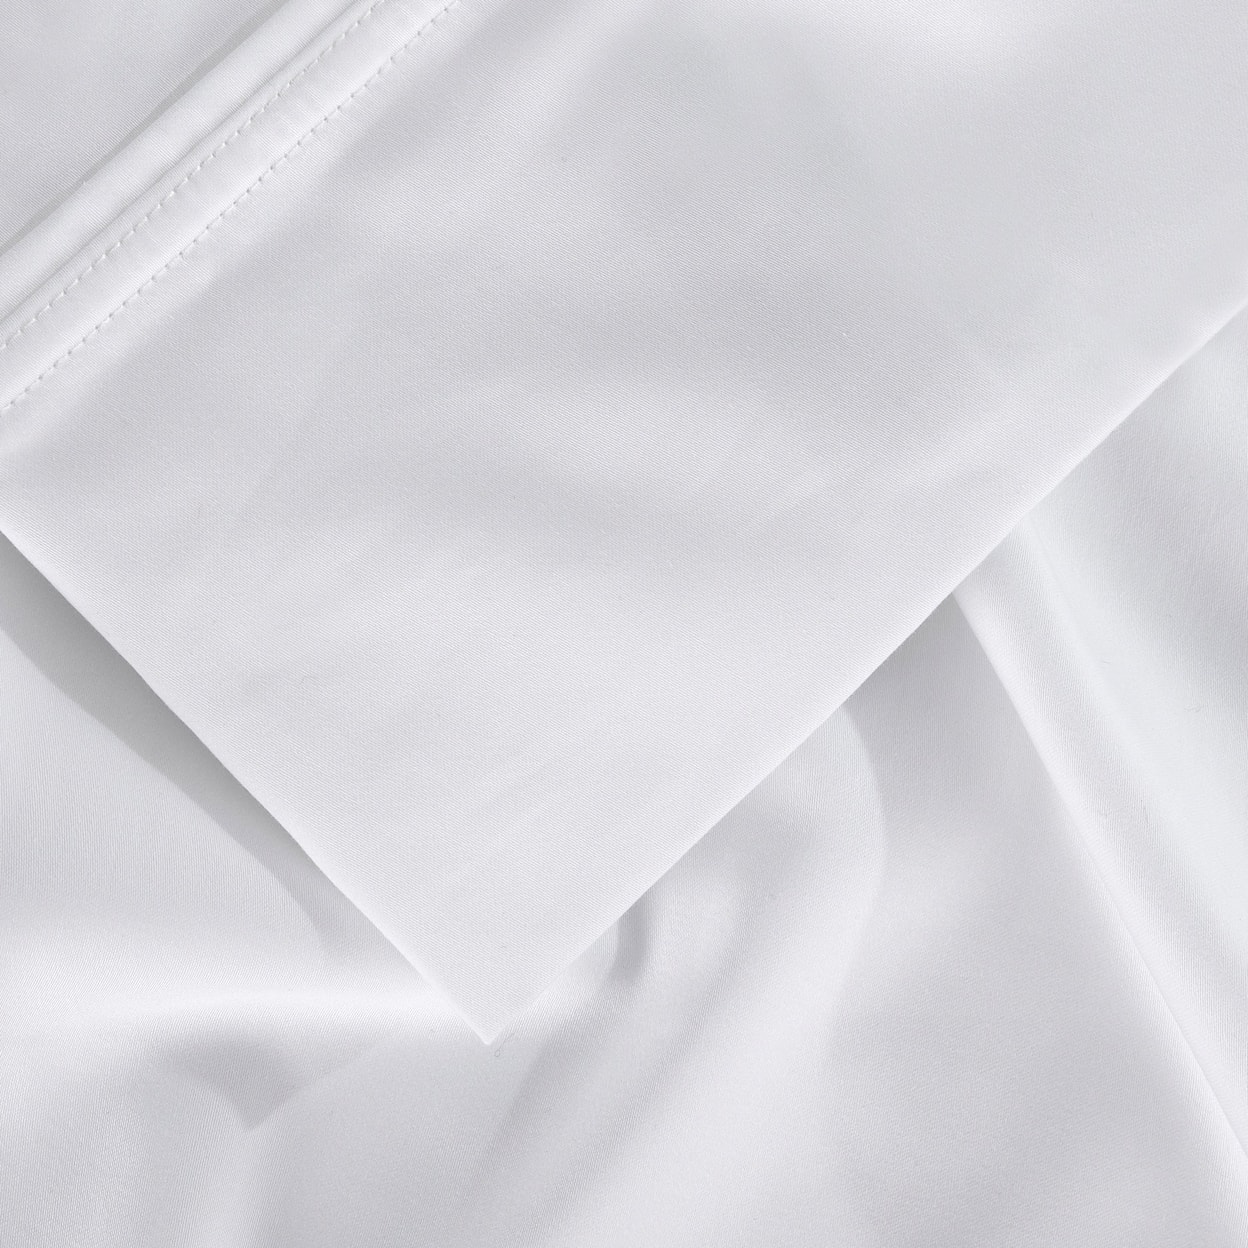 Bedgear Hyper Cotton Sheets Sheet Set,White, Cal King